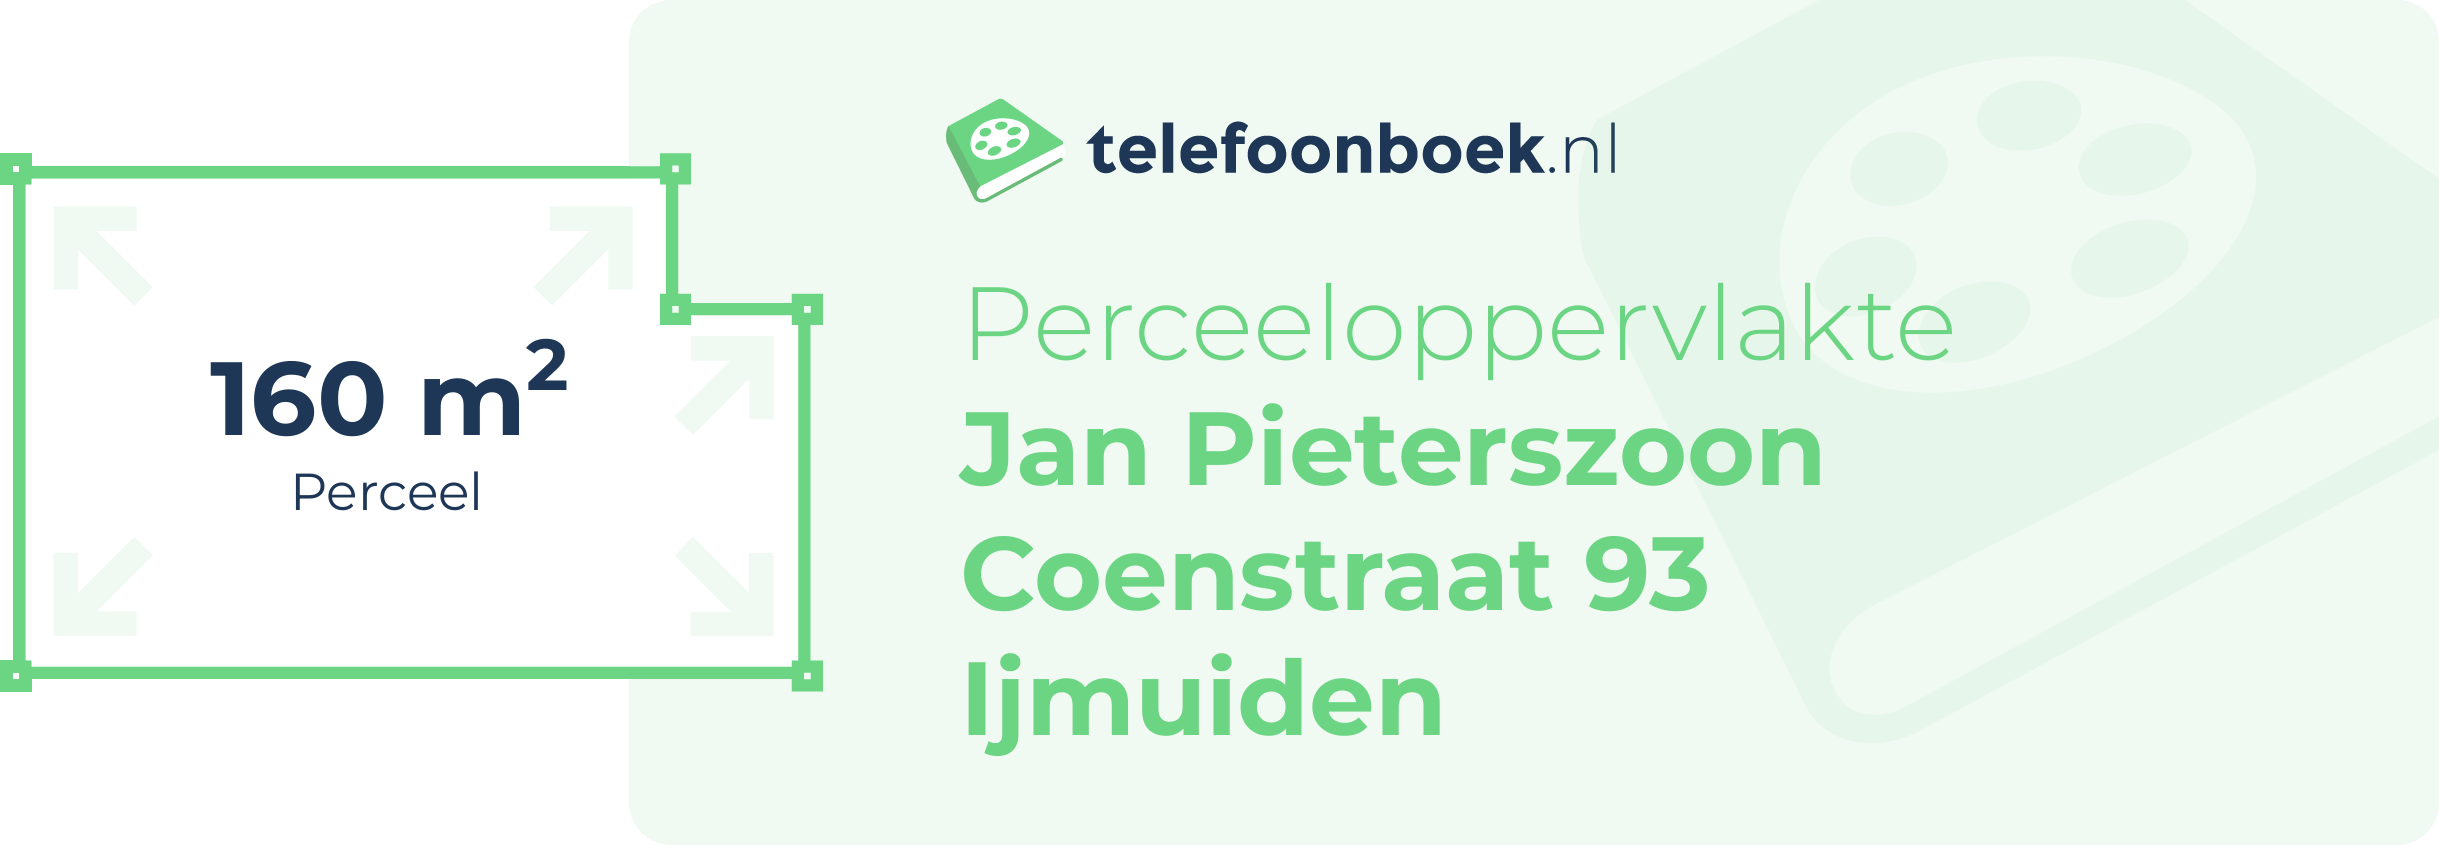 Perceeloppervlakte Jan Pieterszoon Coenstraat 93 Ijmuiden